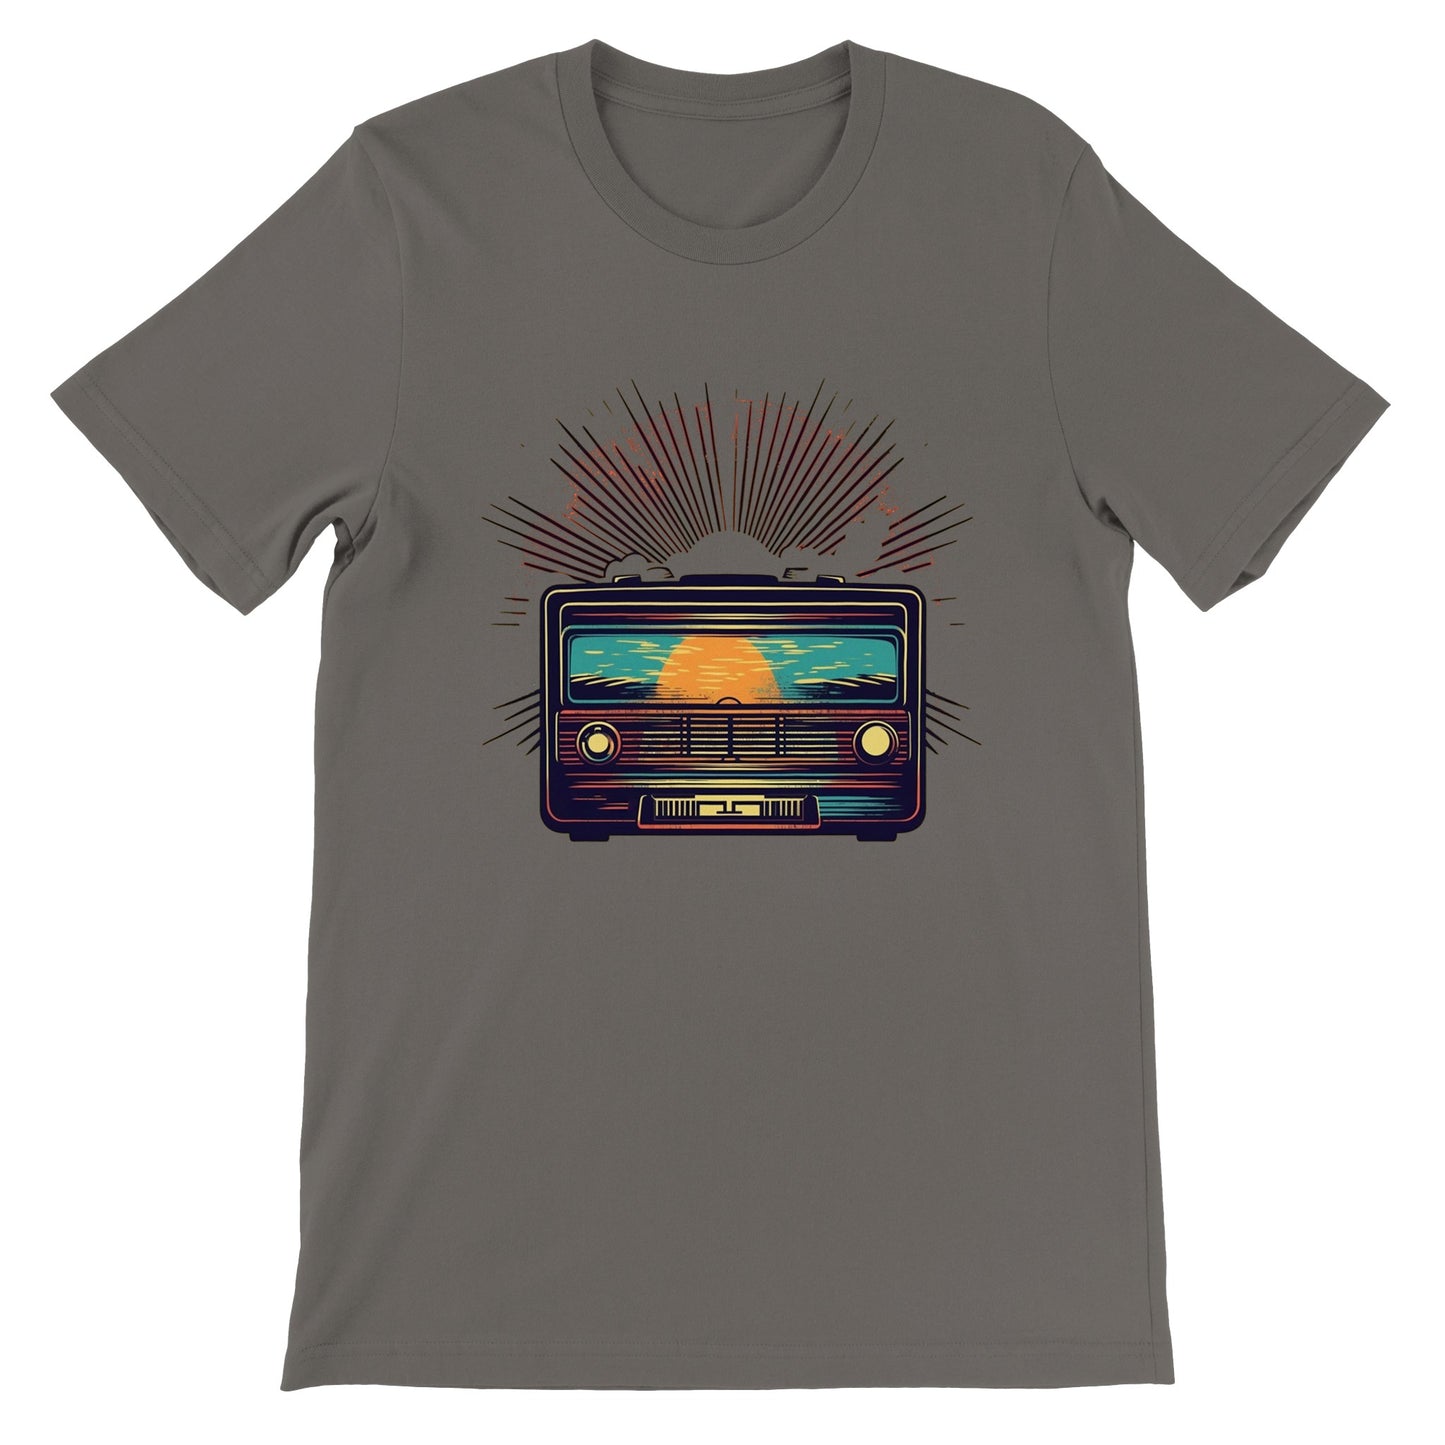 Artwork T-shirt - Vintage Radio Artwork - Premium Unisex T-shirt